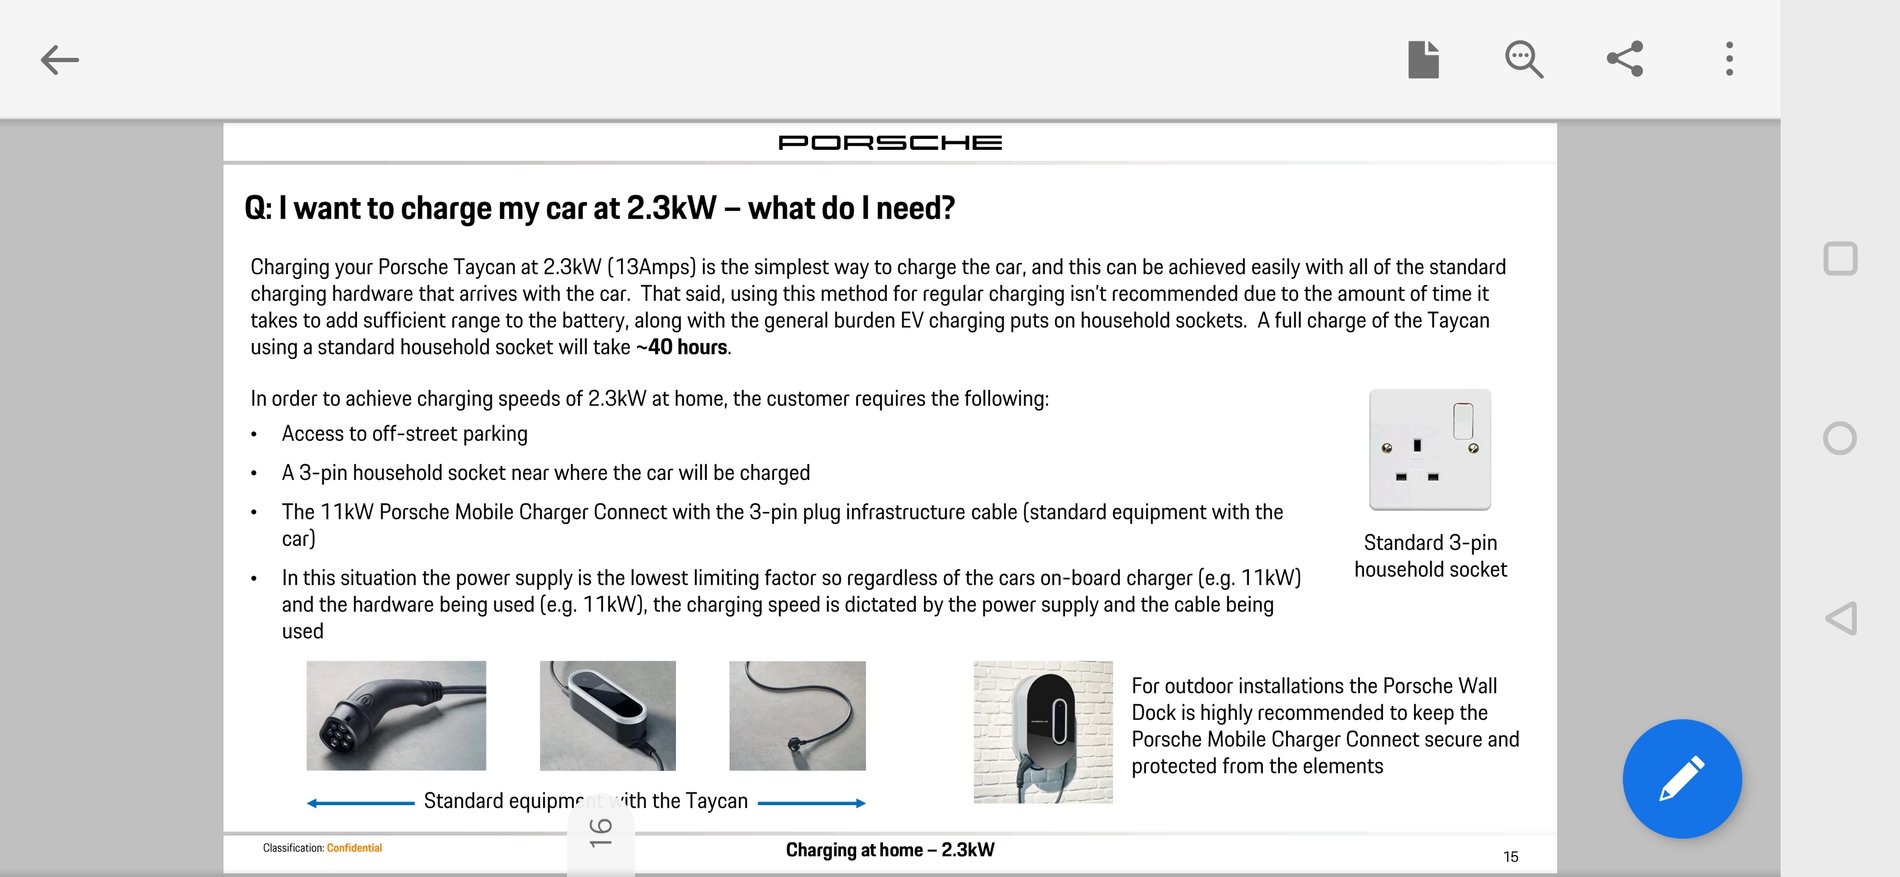 Porsche Taycan Home charging in the UK Screenshot_20200204-214522